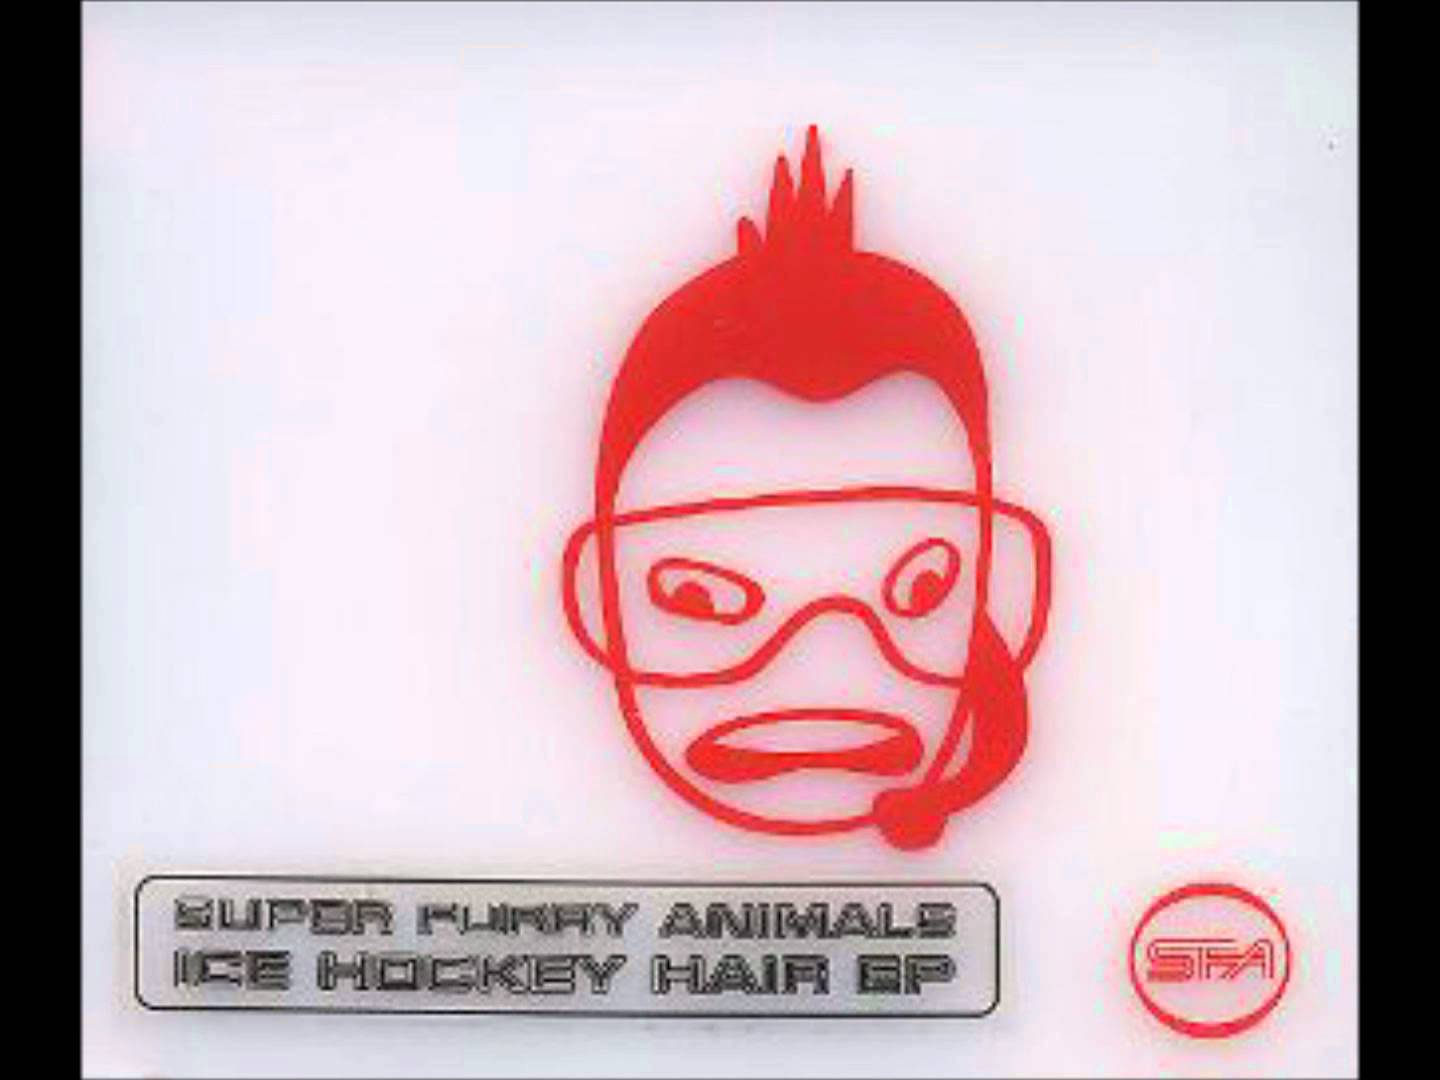 Super Furry Animals – Ice Hockey Hair